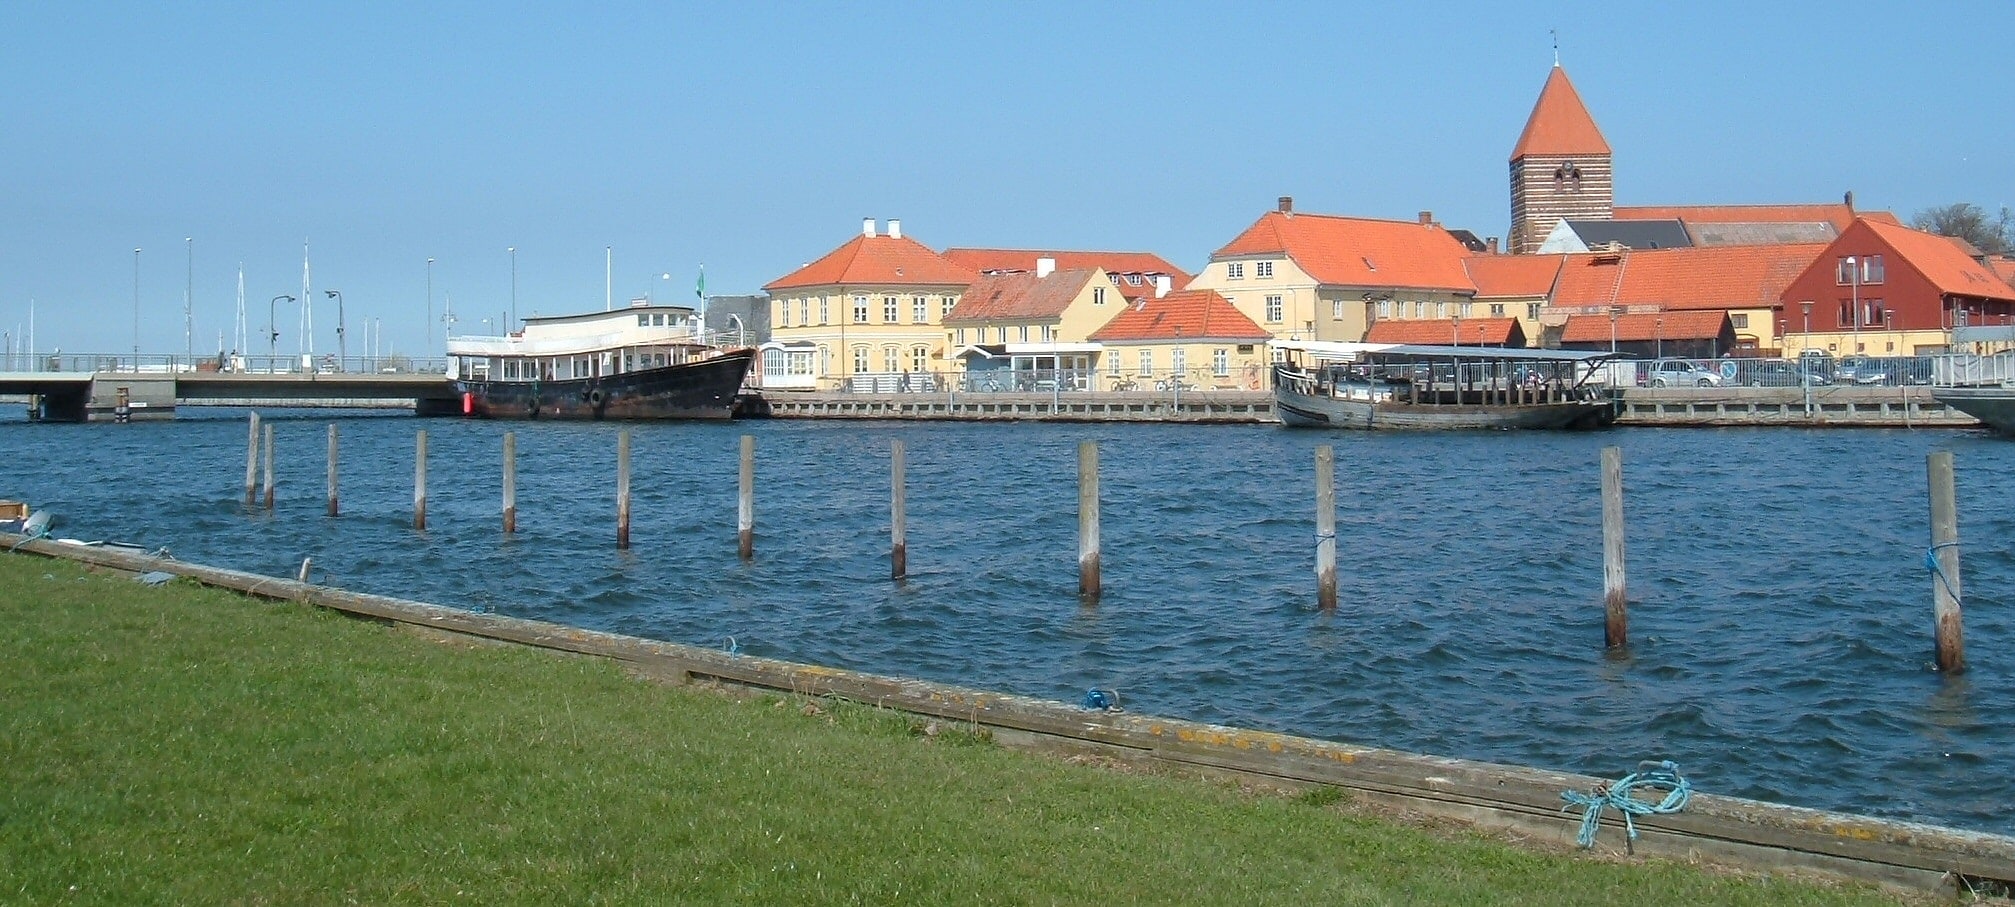 Stege, Dänemark